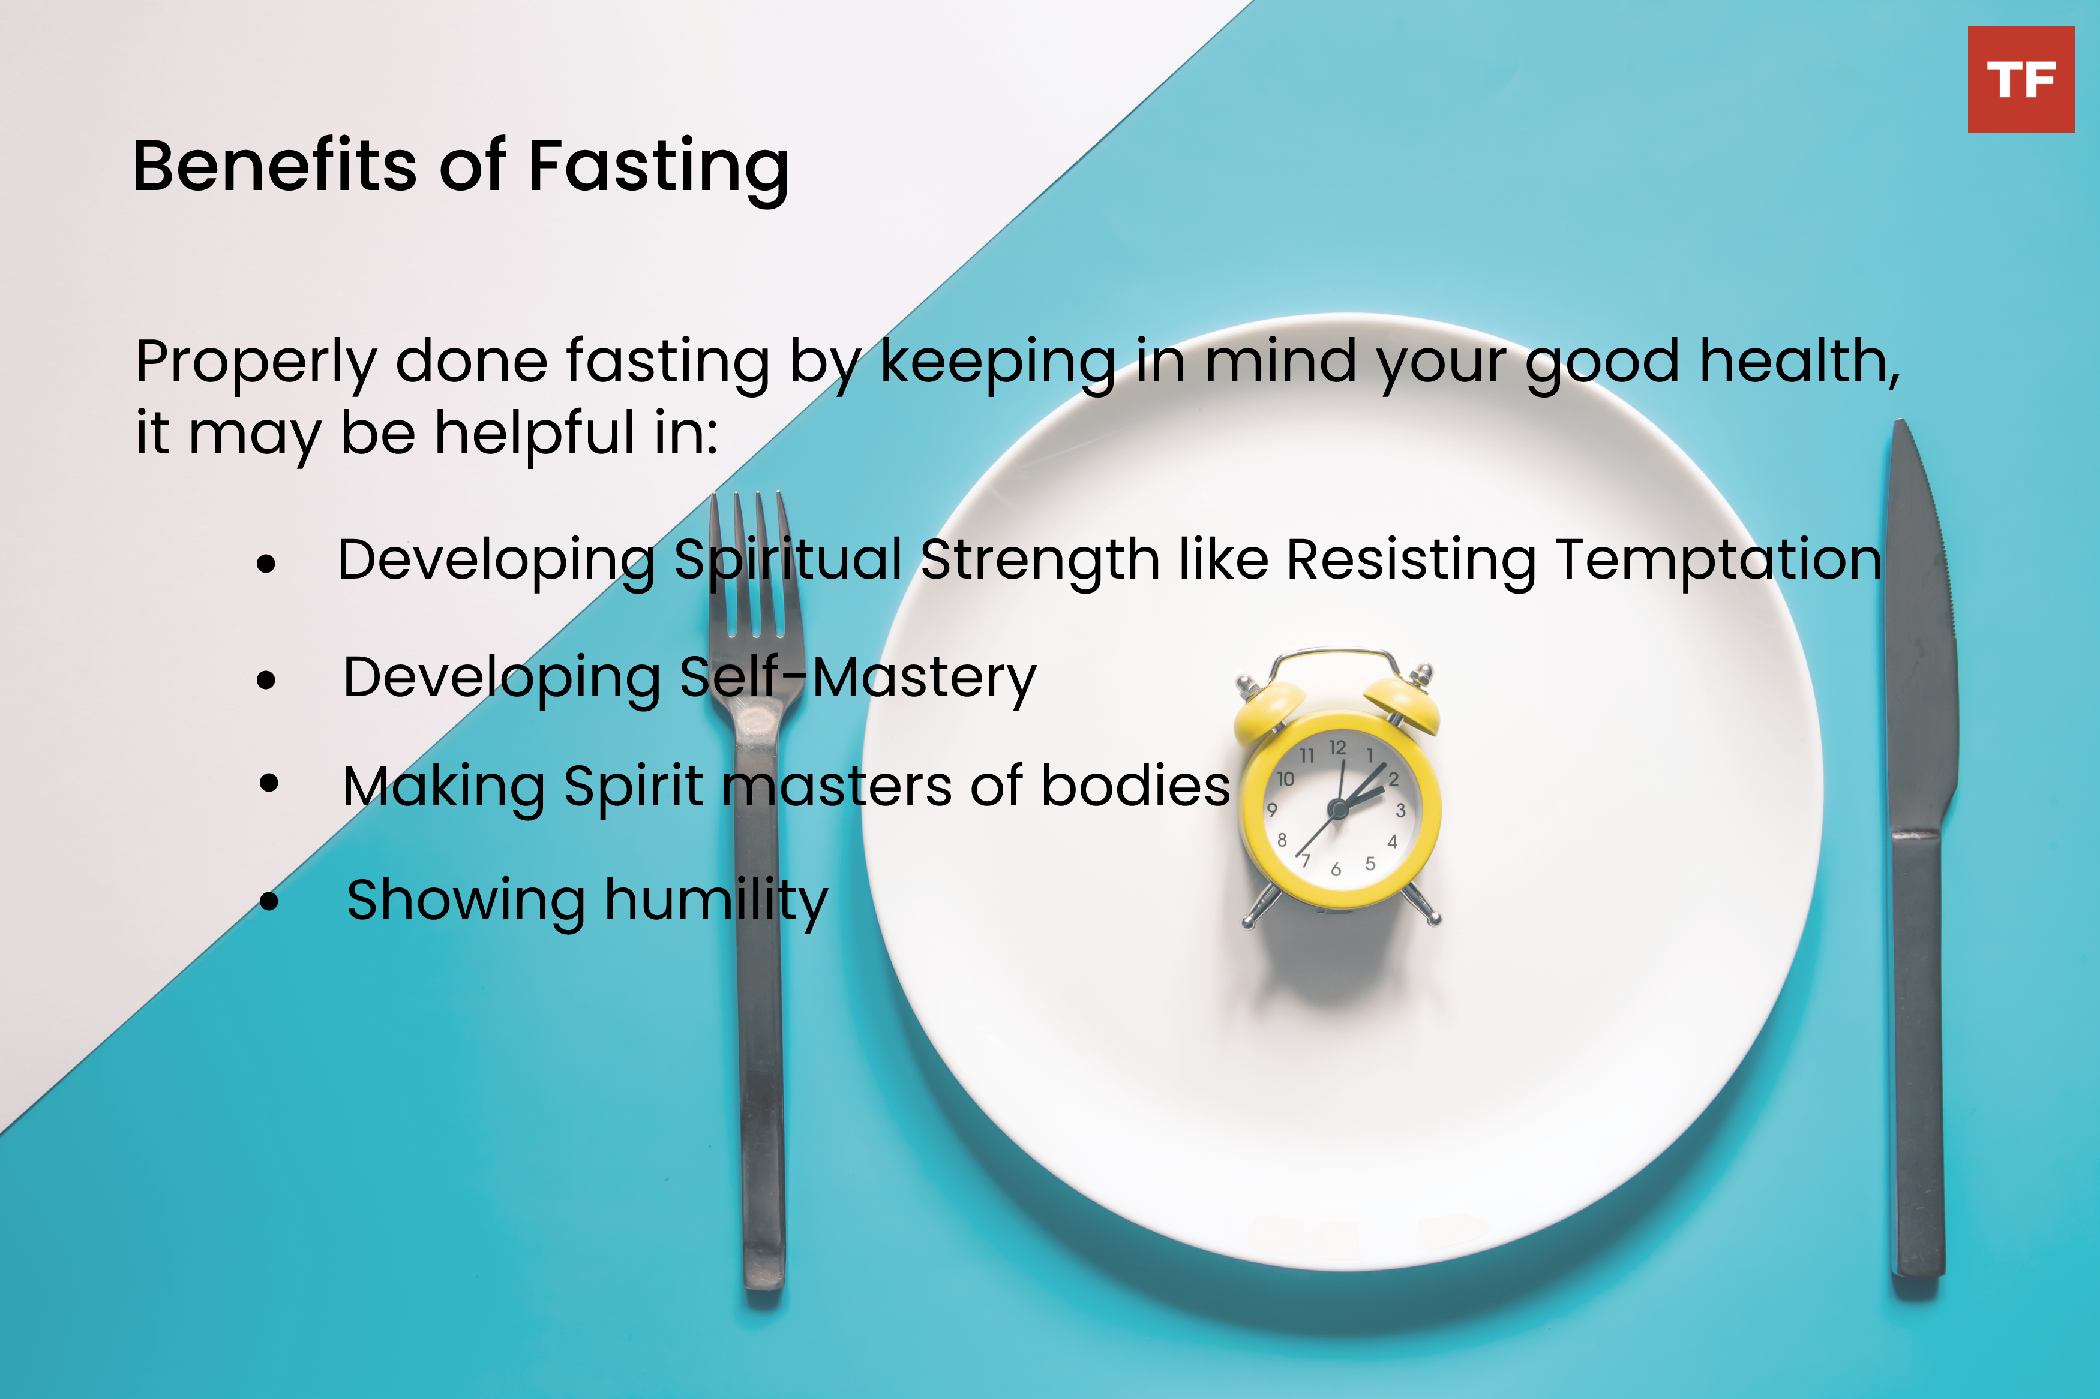 fasting benefits